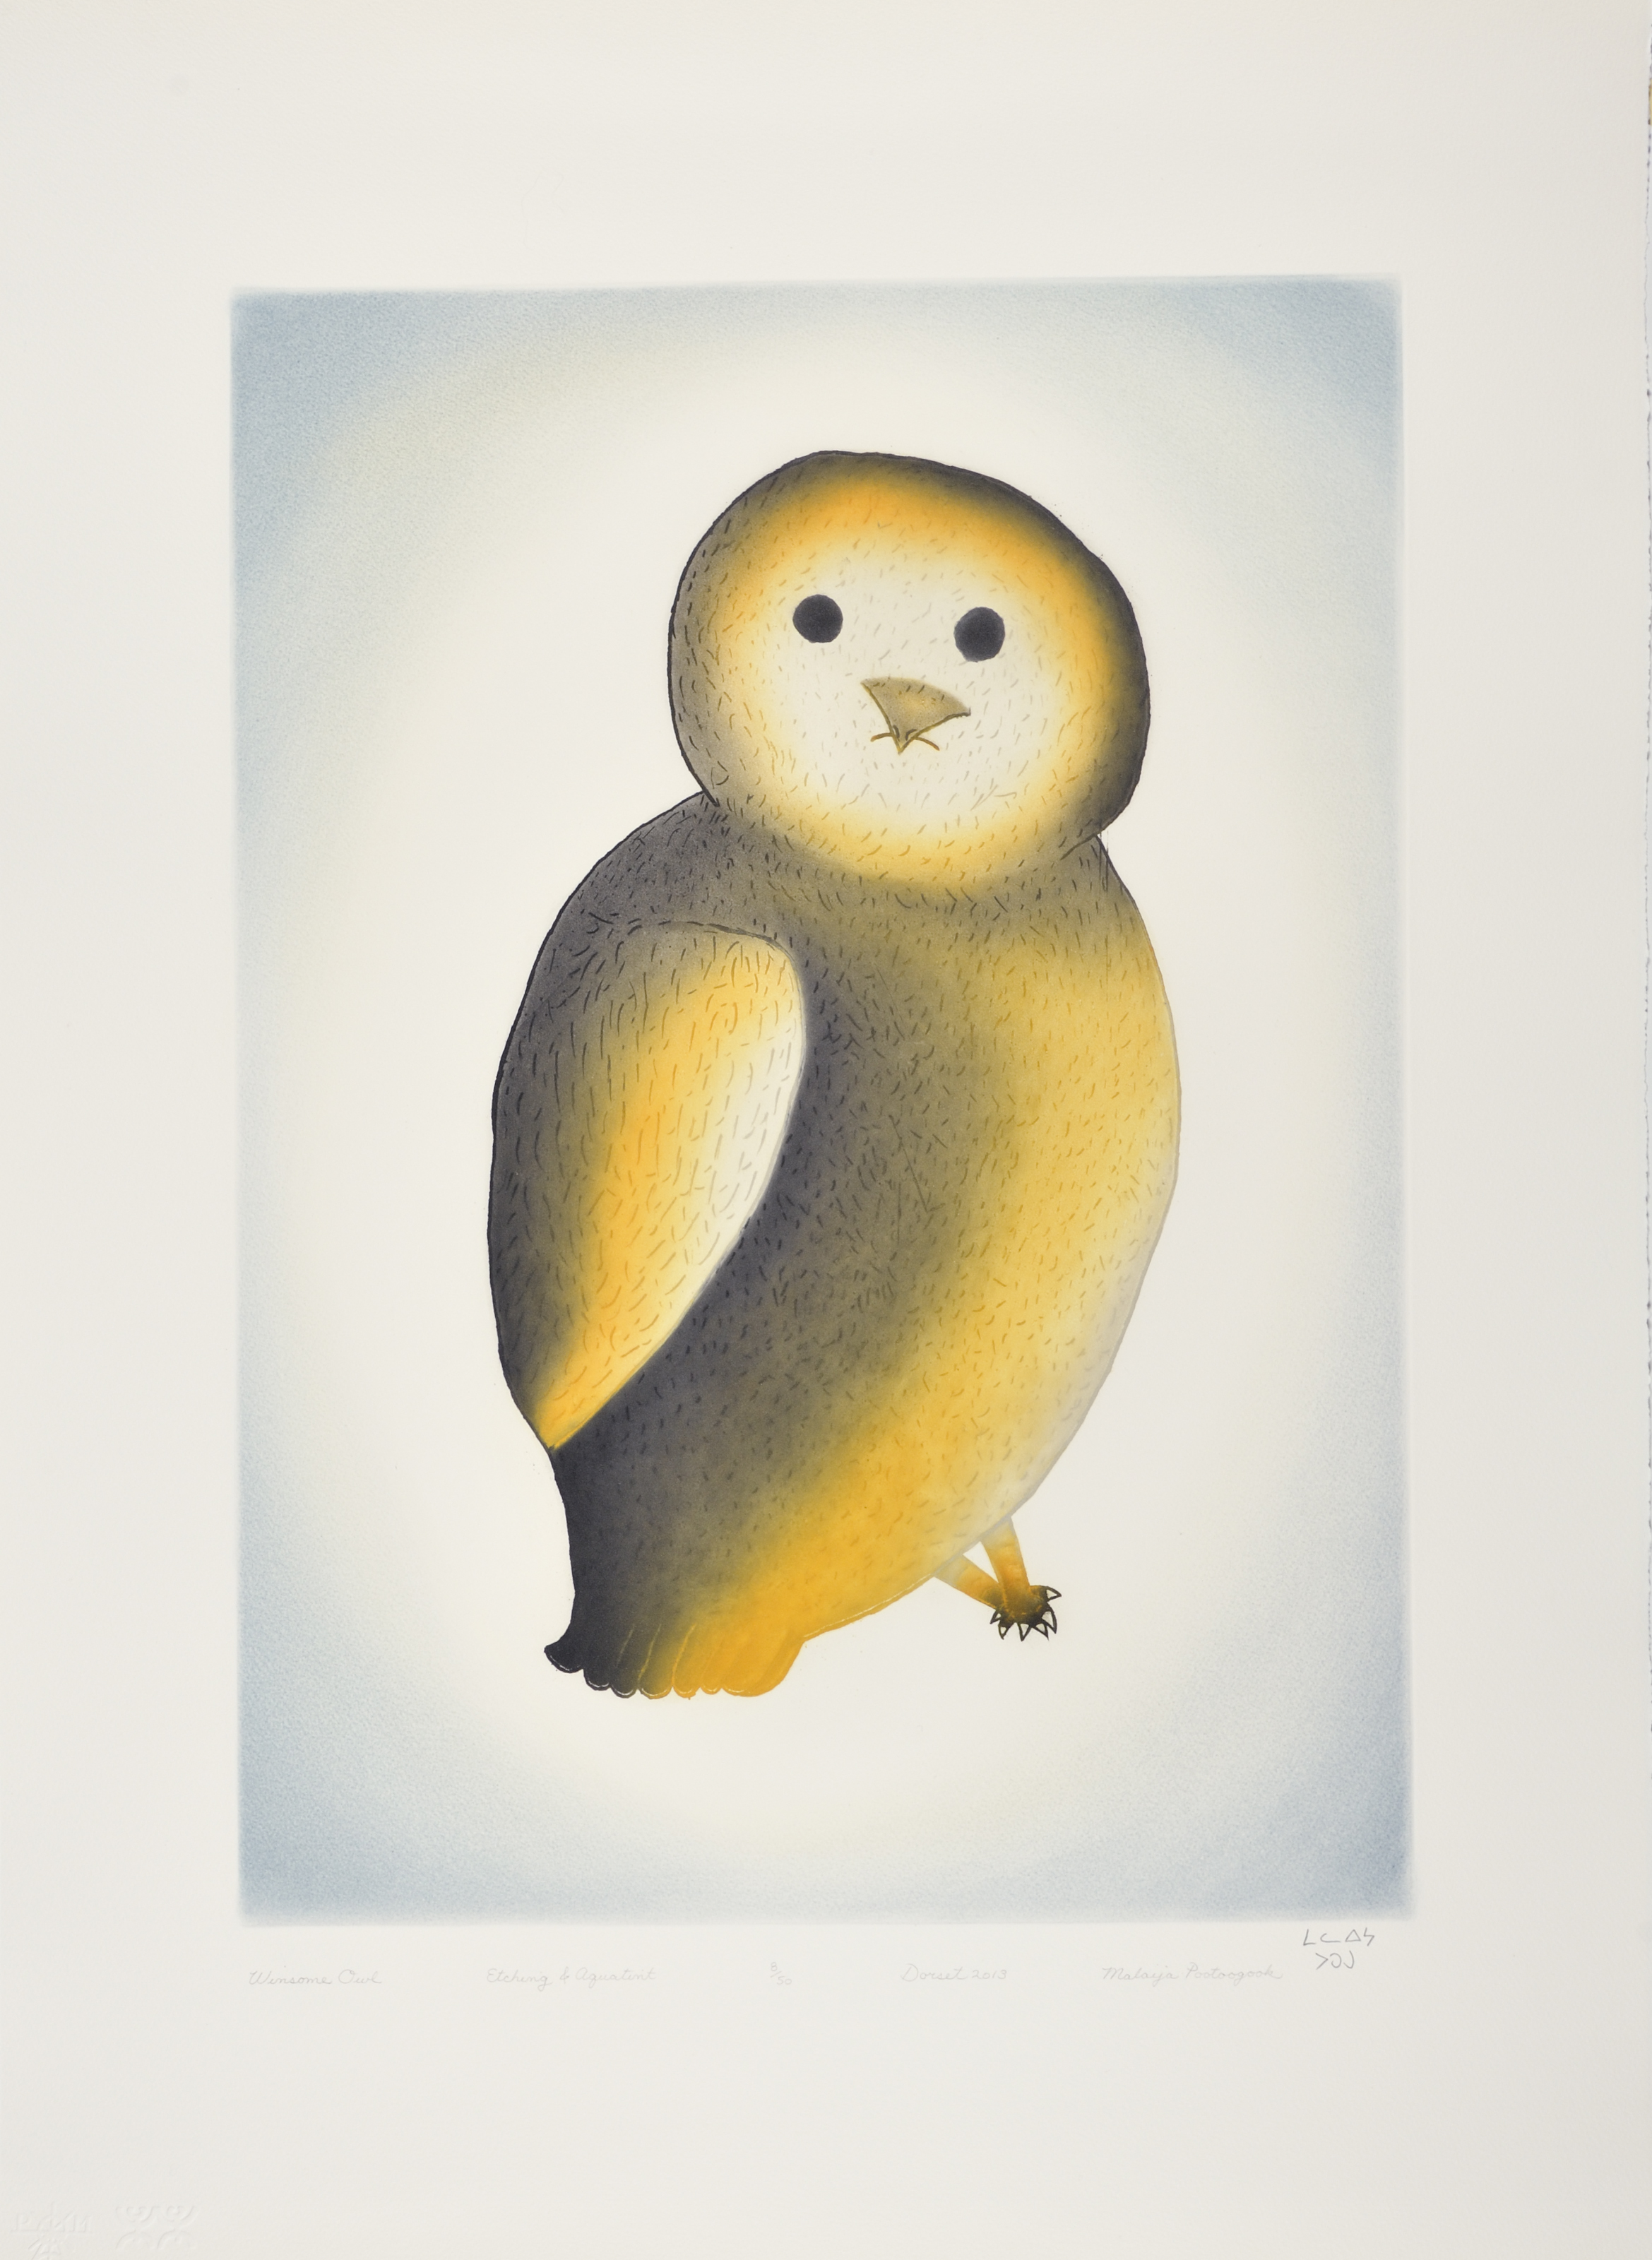 Winsome Owl [Hibou charmeur], eau-forte et aquatinte sur papier, Malaija Pootoogook